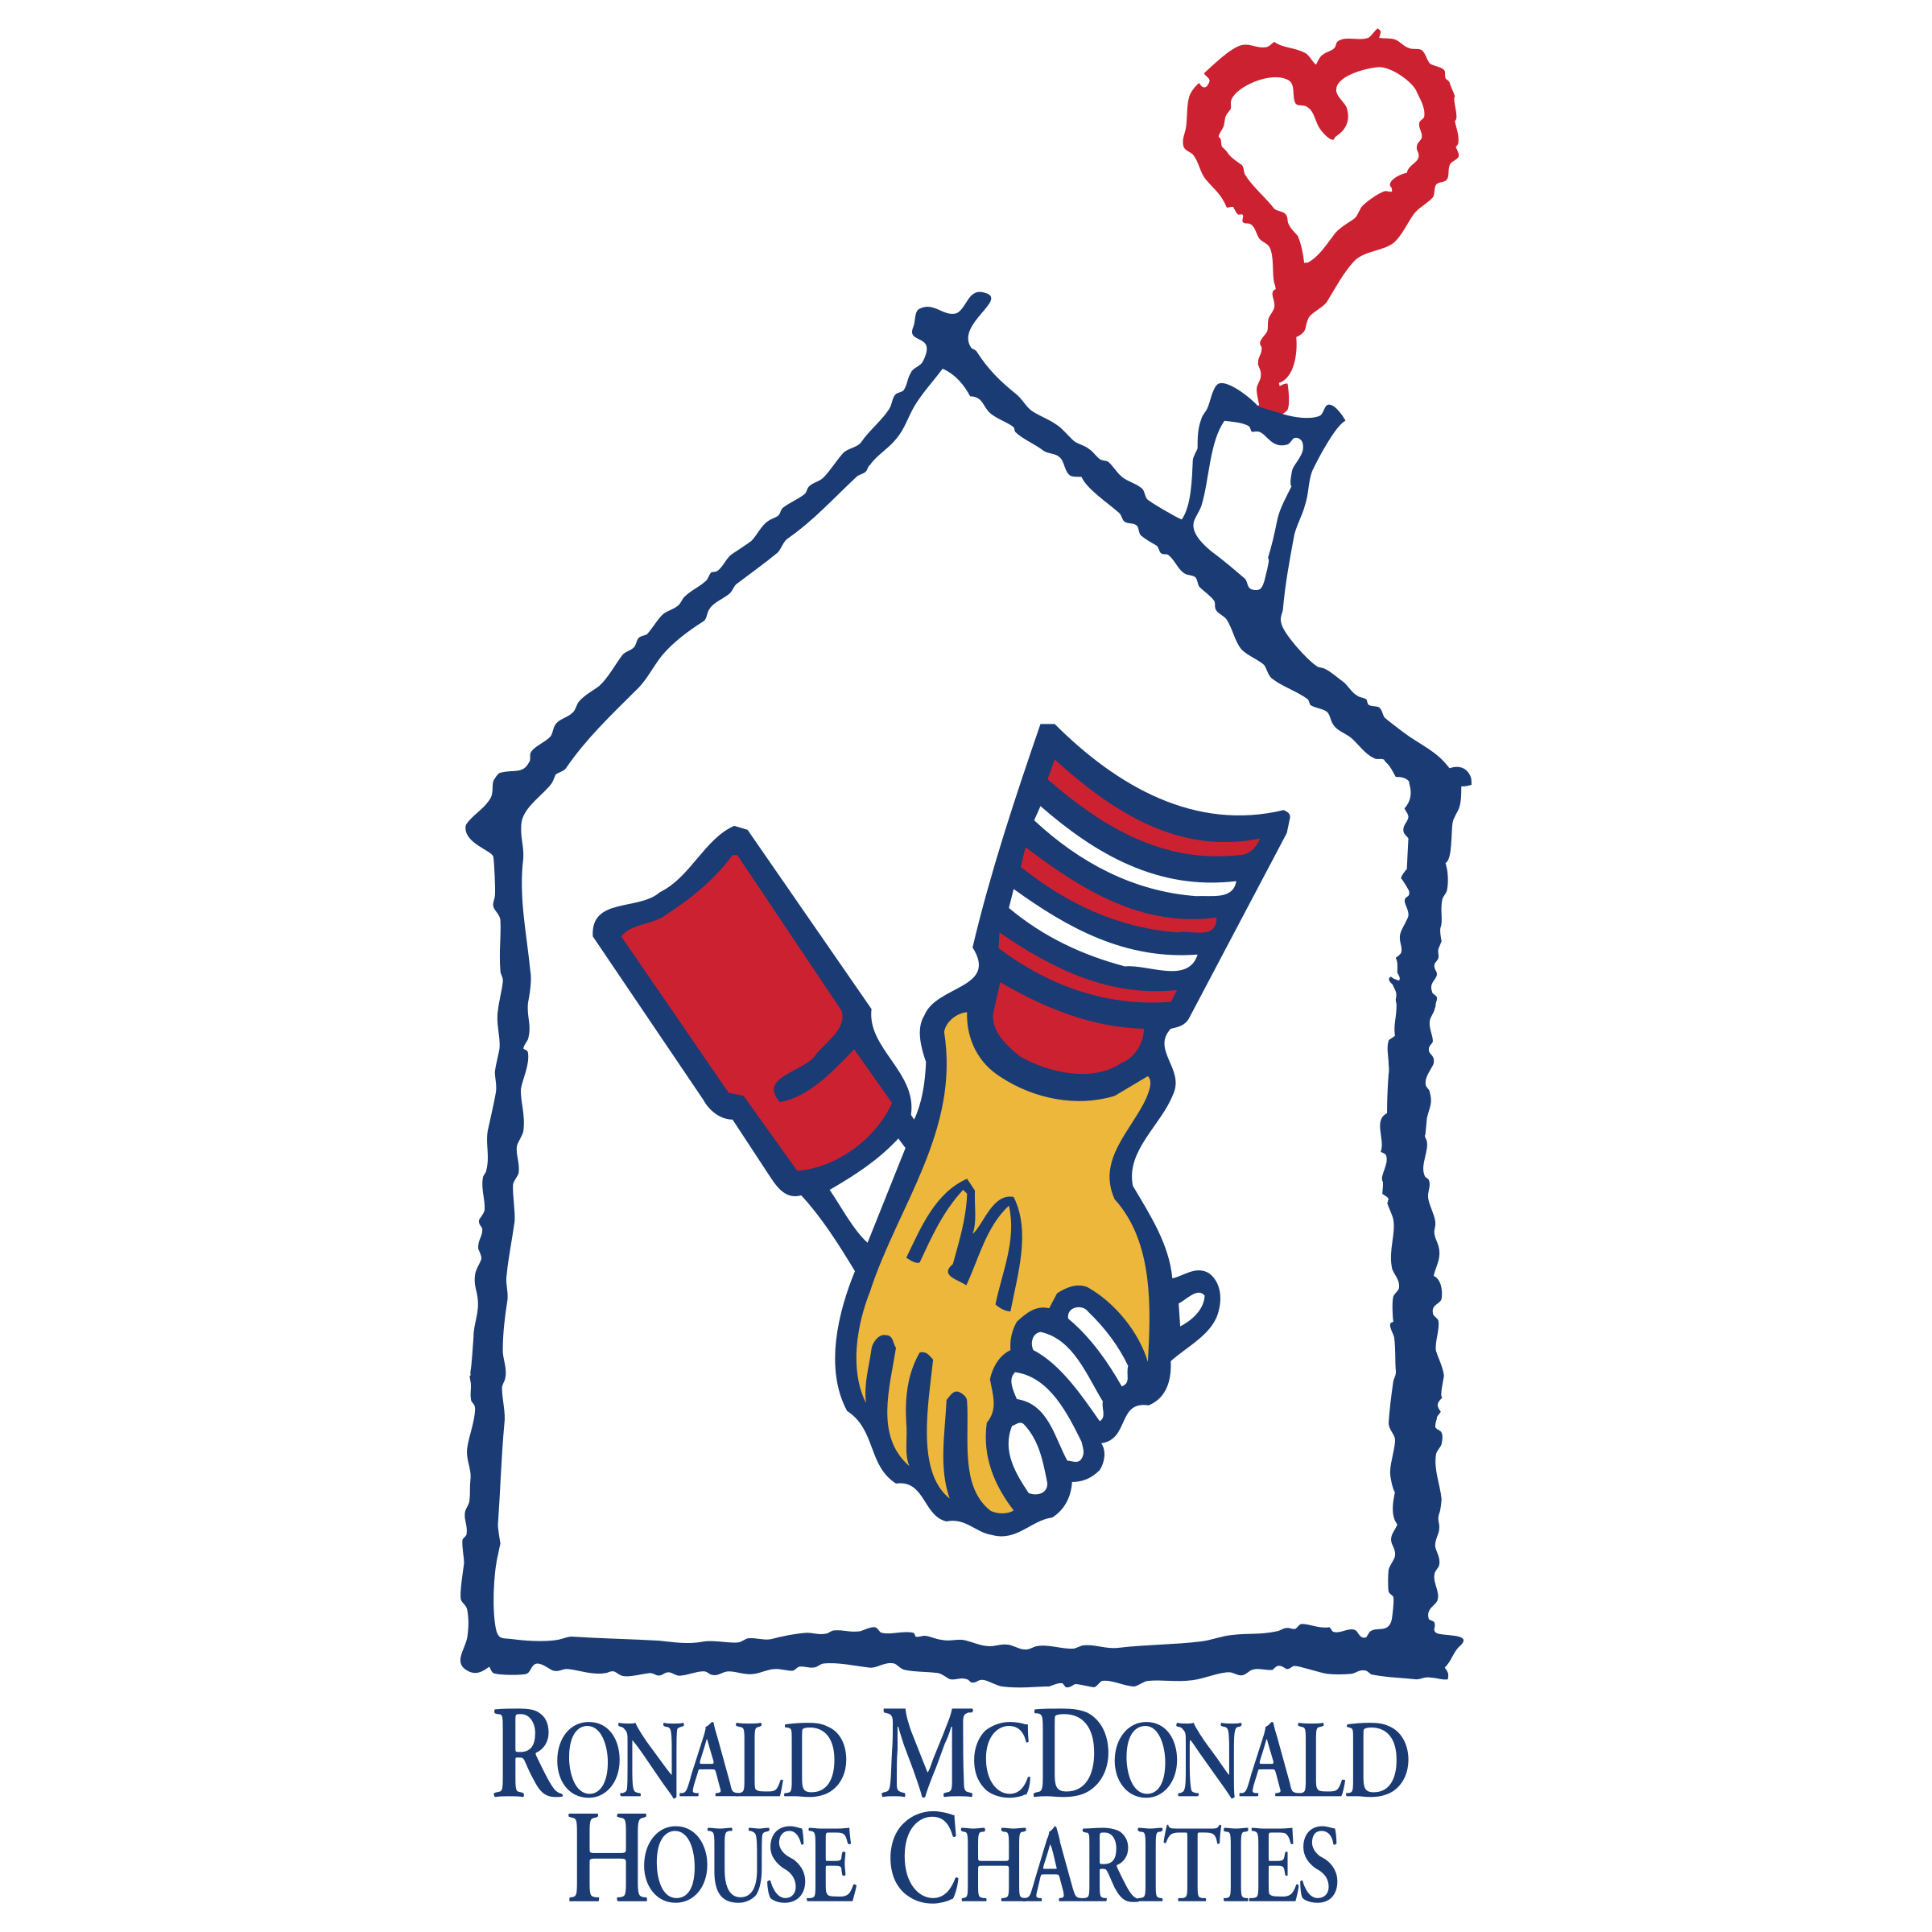 Ronald McDonald house charities logo